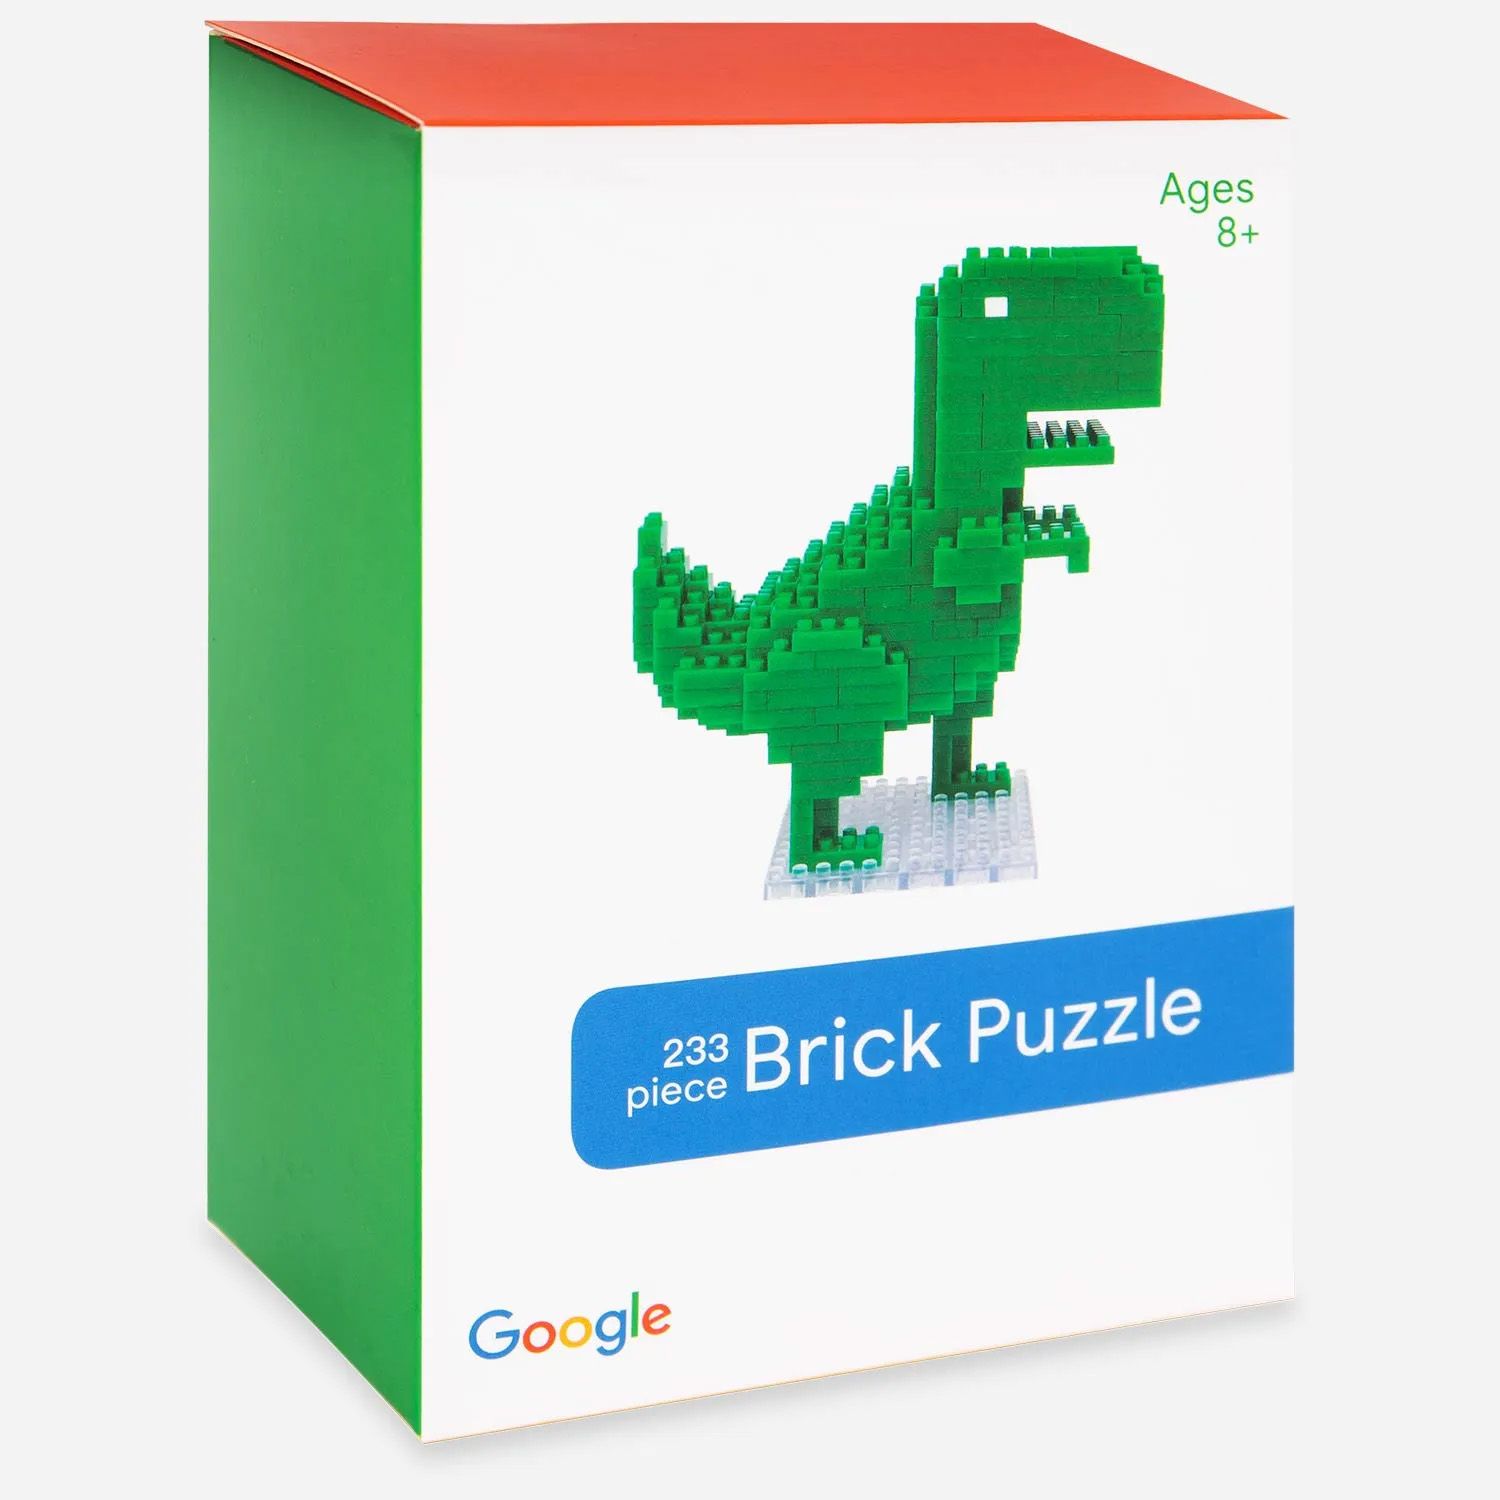 Box for Dino brick puzzle, showing a green brick dinosaur.